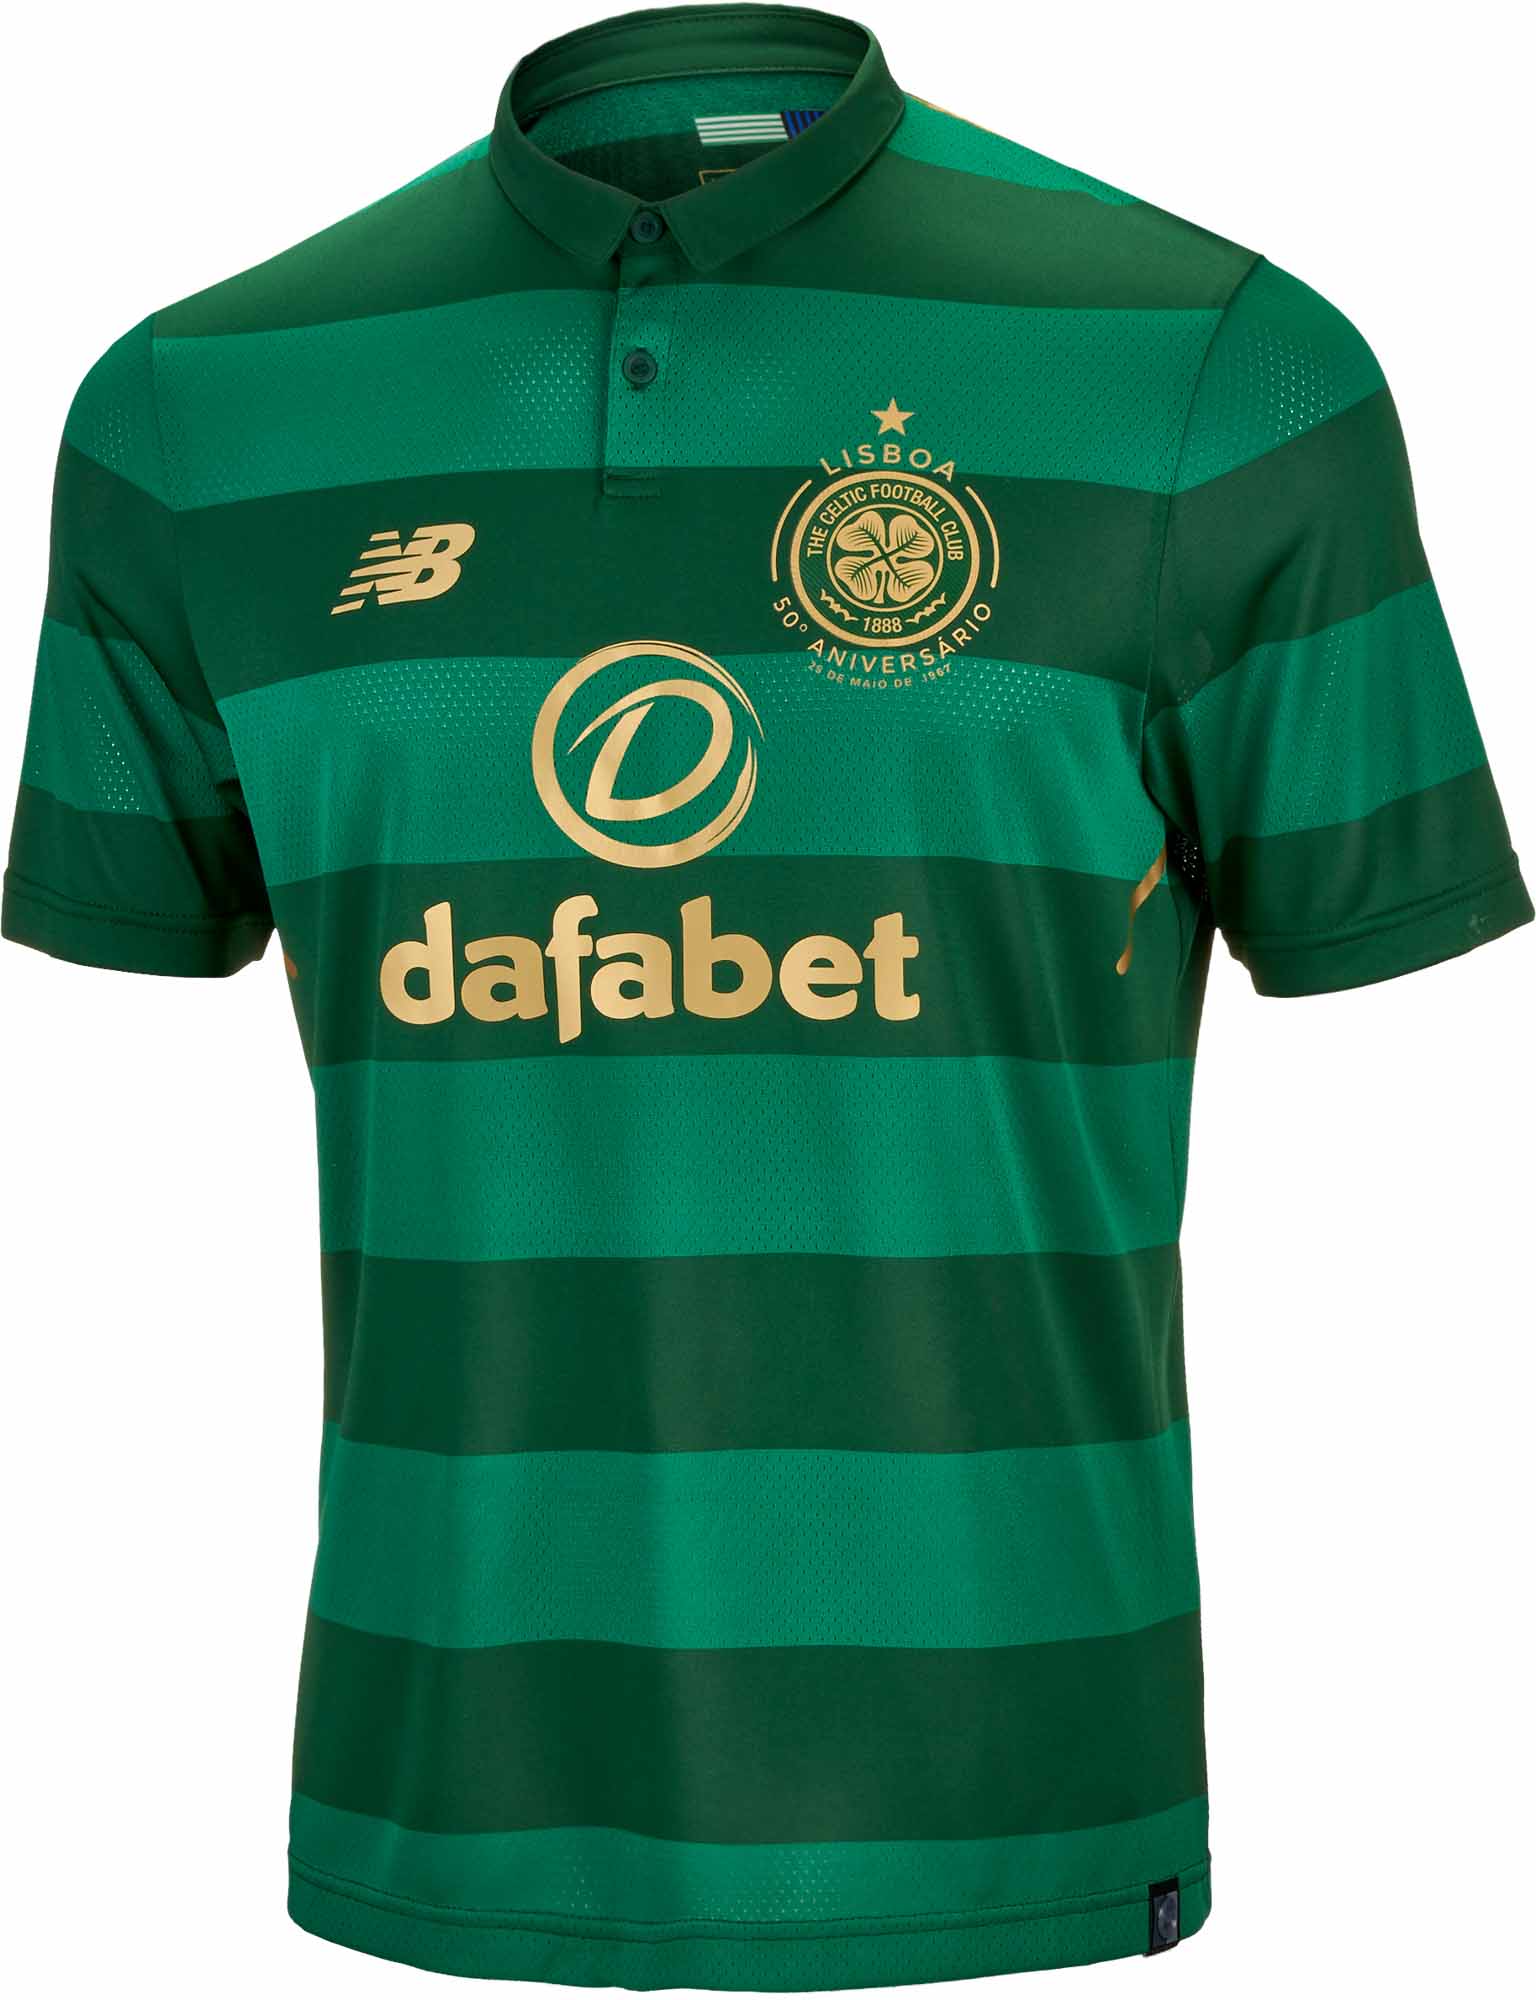 New Balance Men's Celtic Football Away Elite Jersey, Away, S : Buy